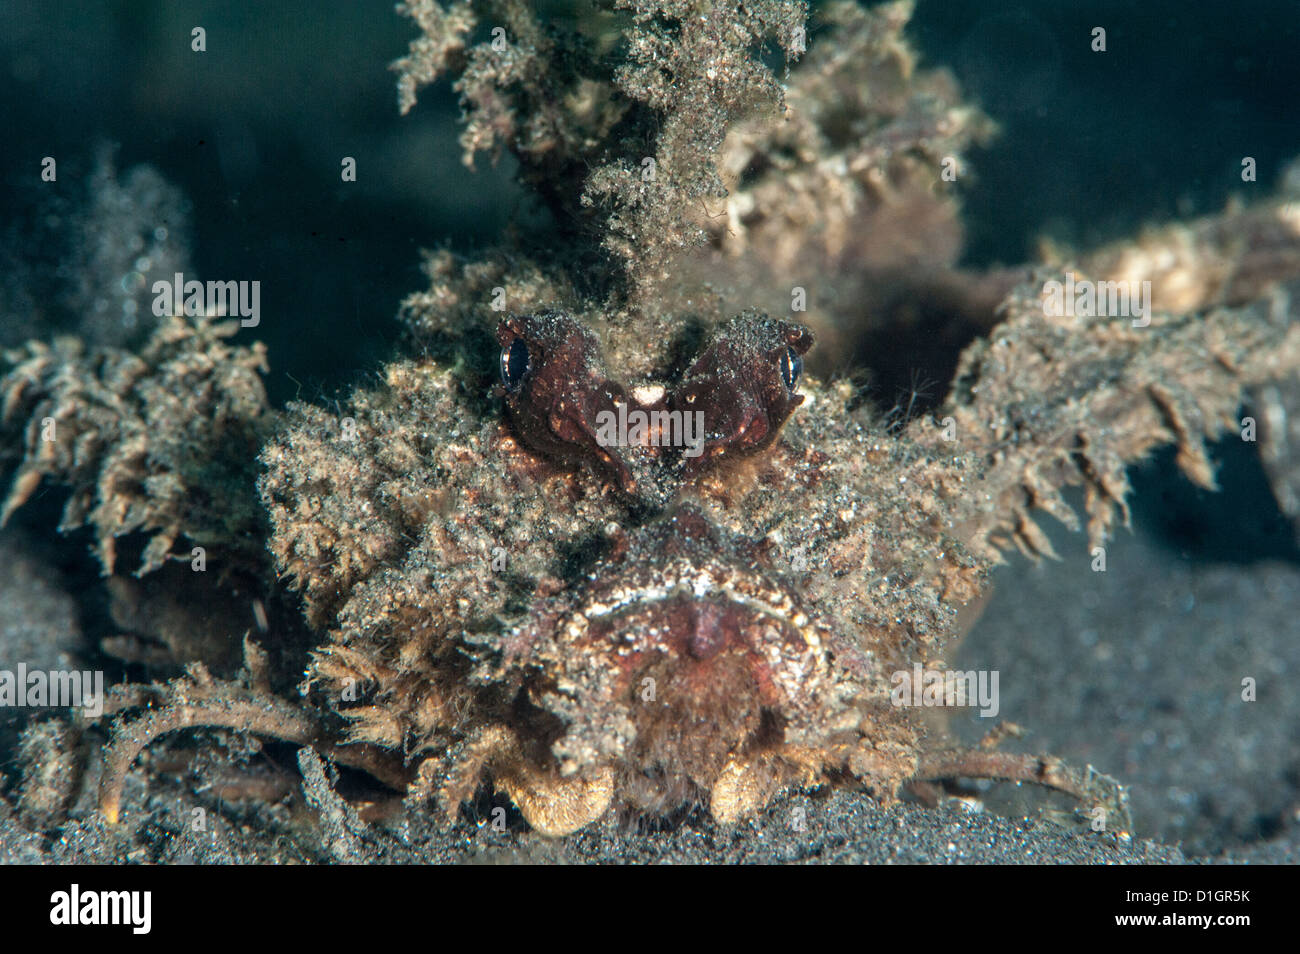 Ambon scorpionfish (Pteroidichthys amboinensis), Sulawesi, Indonesia, Southeast Asia, Asia Stock Photo